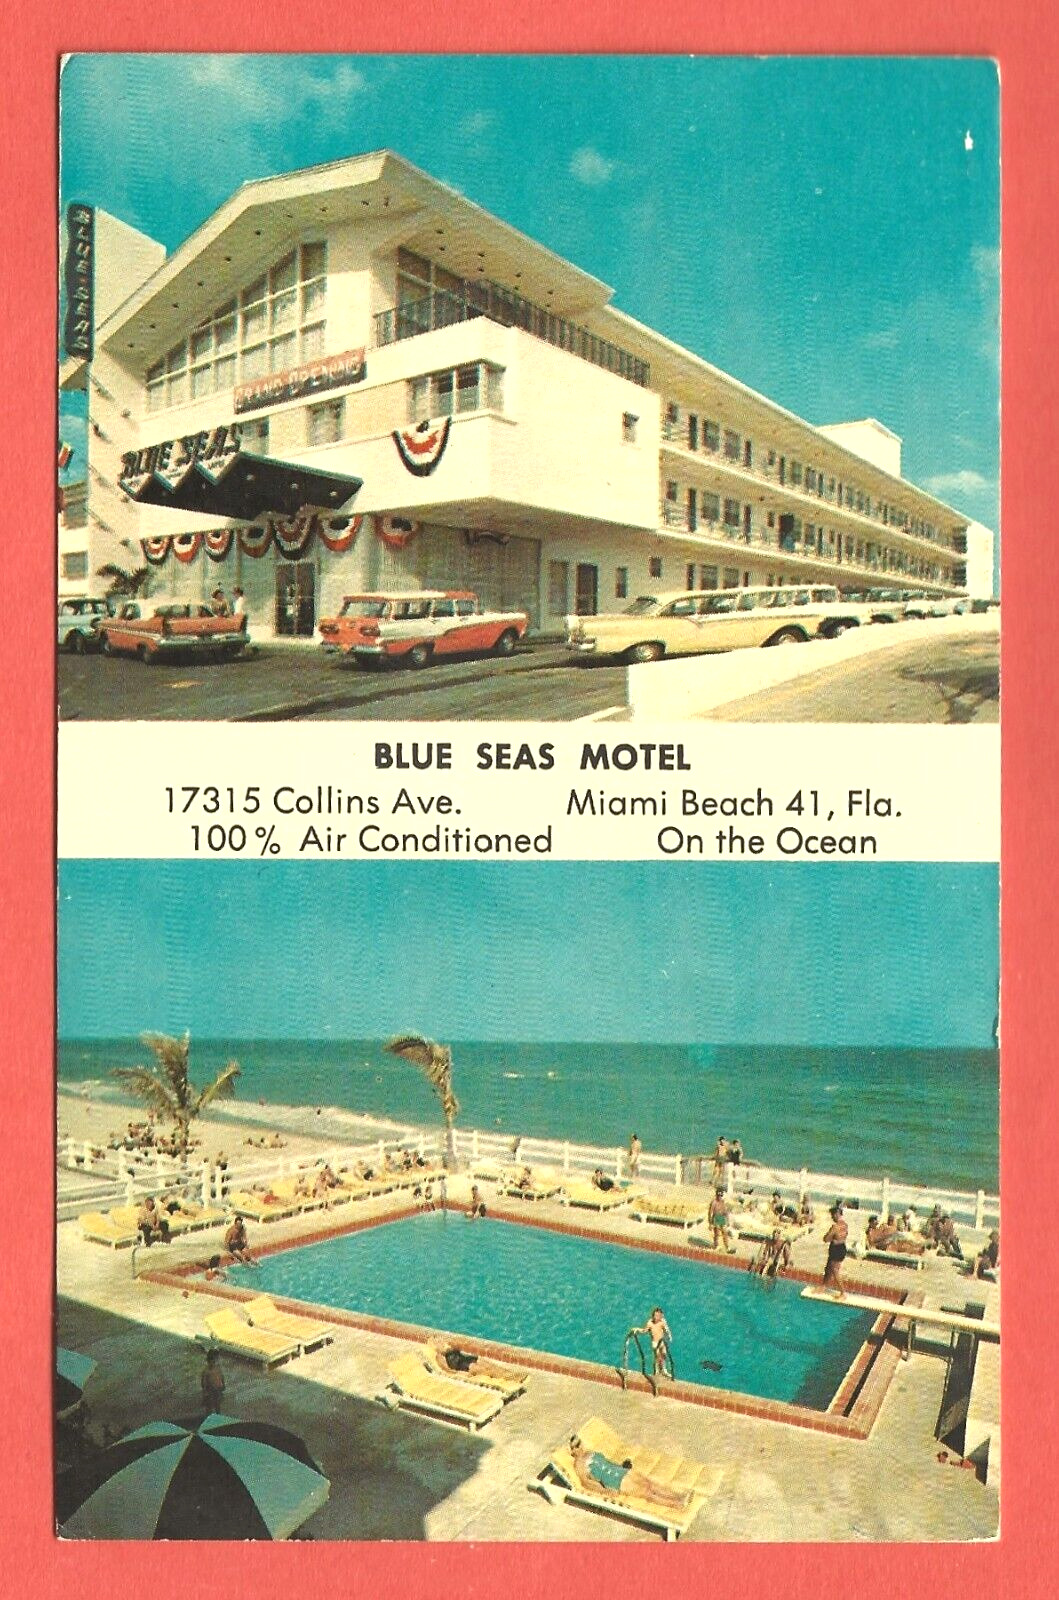 BLUE SEAS RESORT MOTEL, MIAMI BEACH, FLA. – Swimming Pool - 1959 Postcard